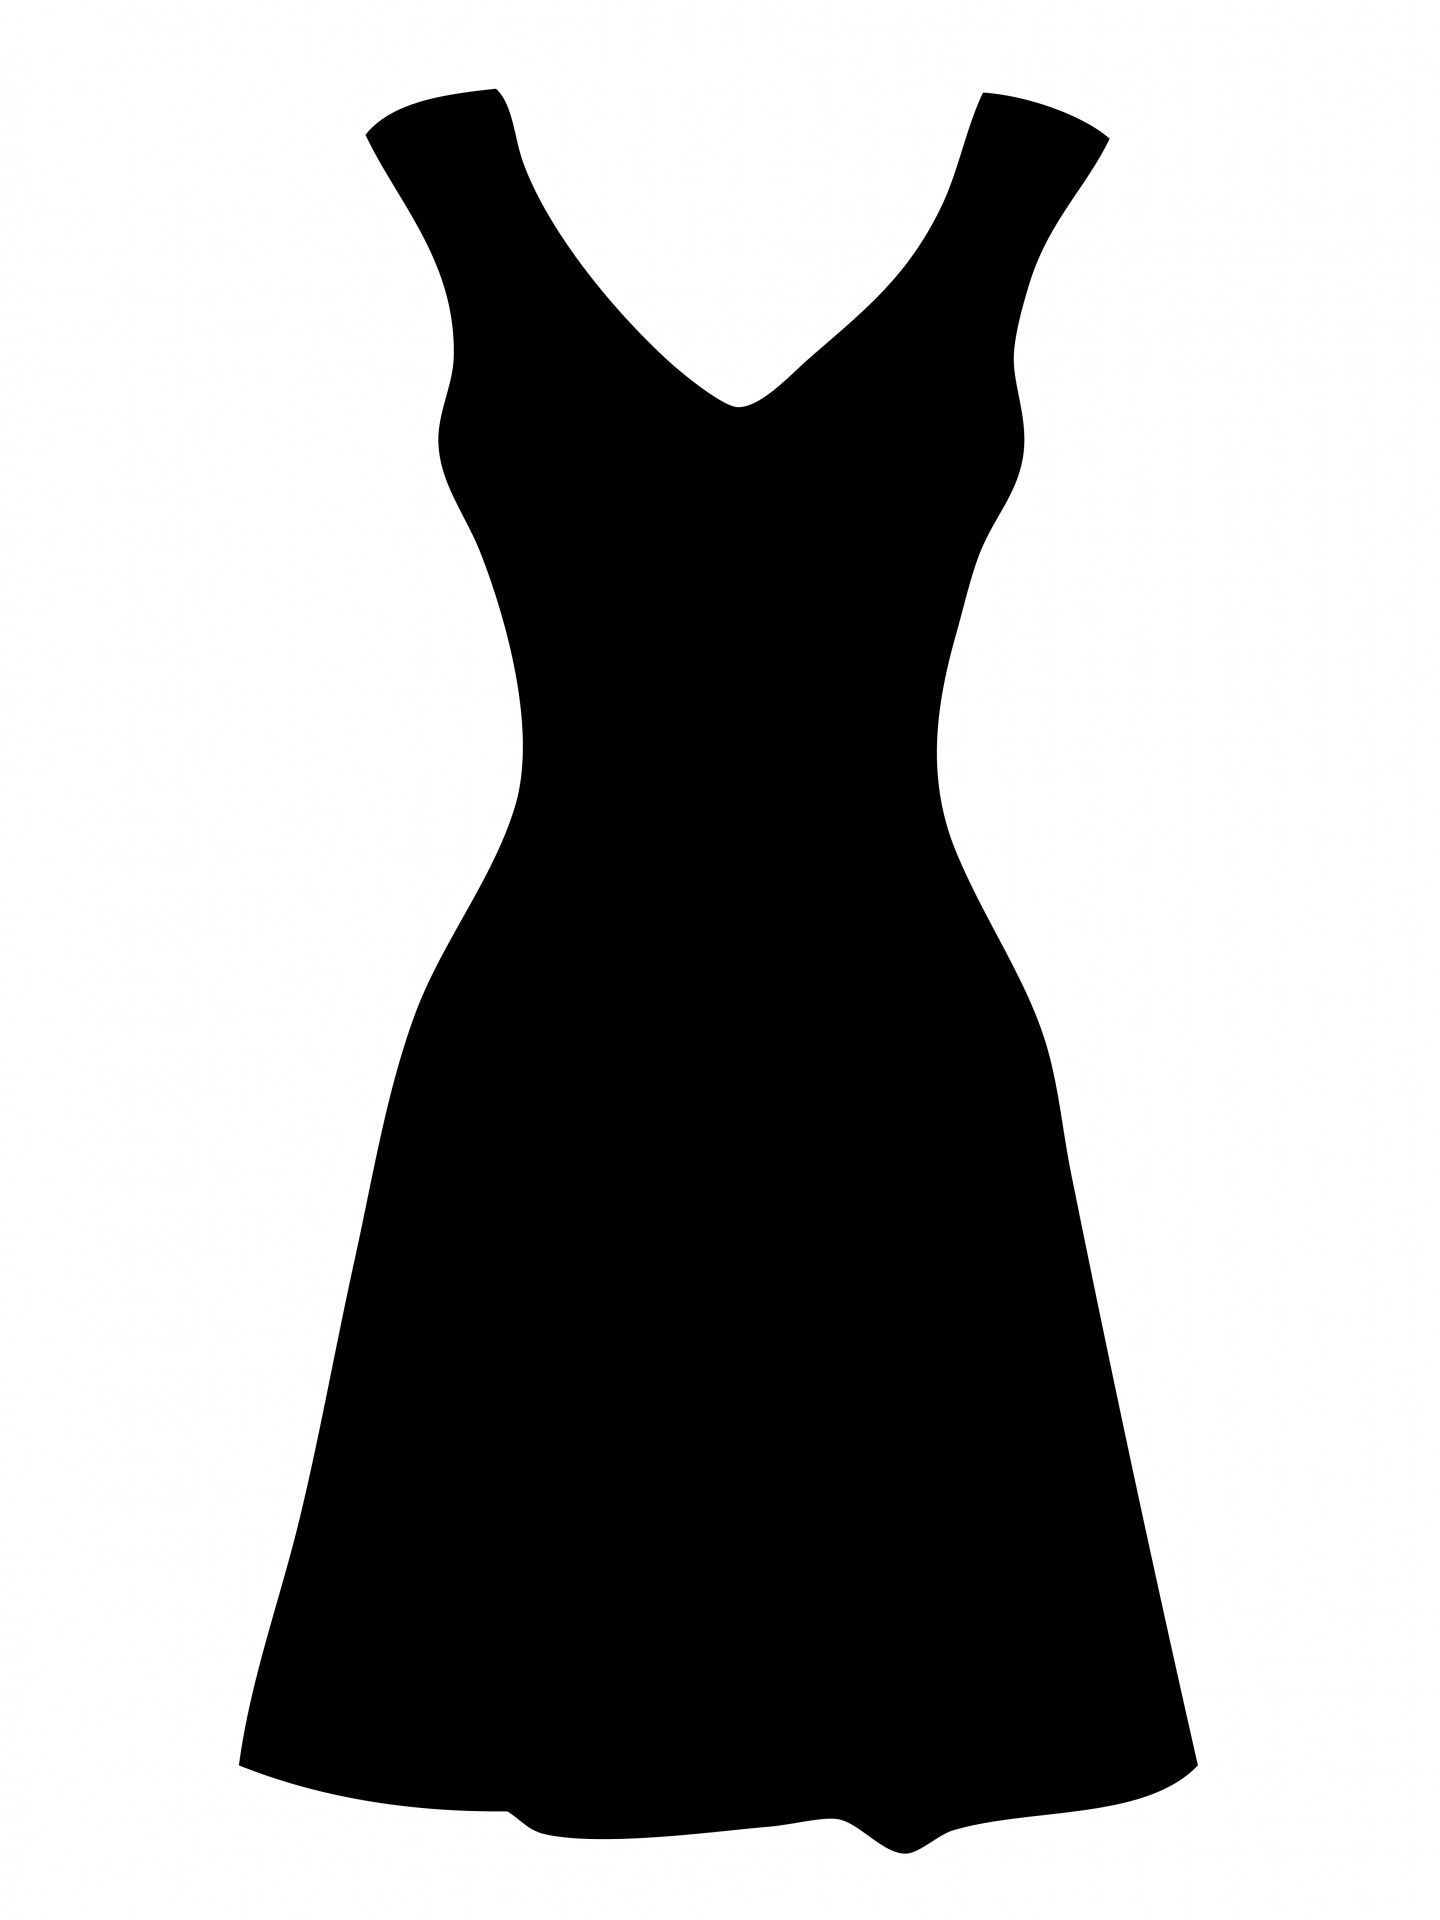 Free Clipart Of Dresses | Black Dress Clipart by Karen Arnold